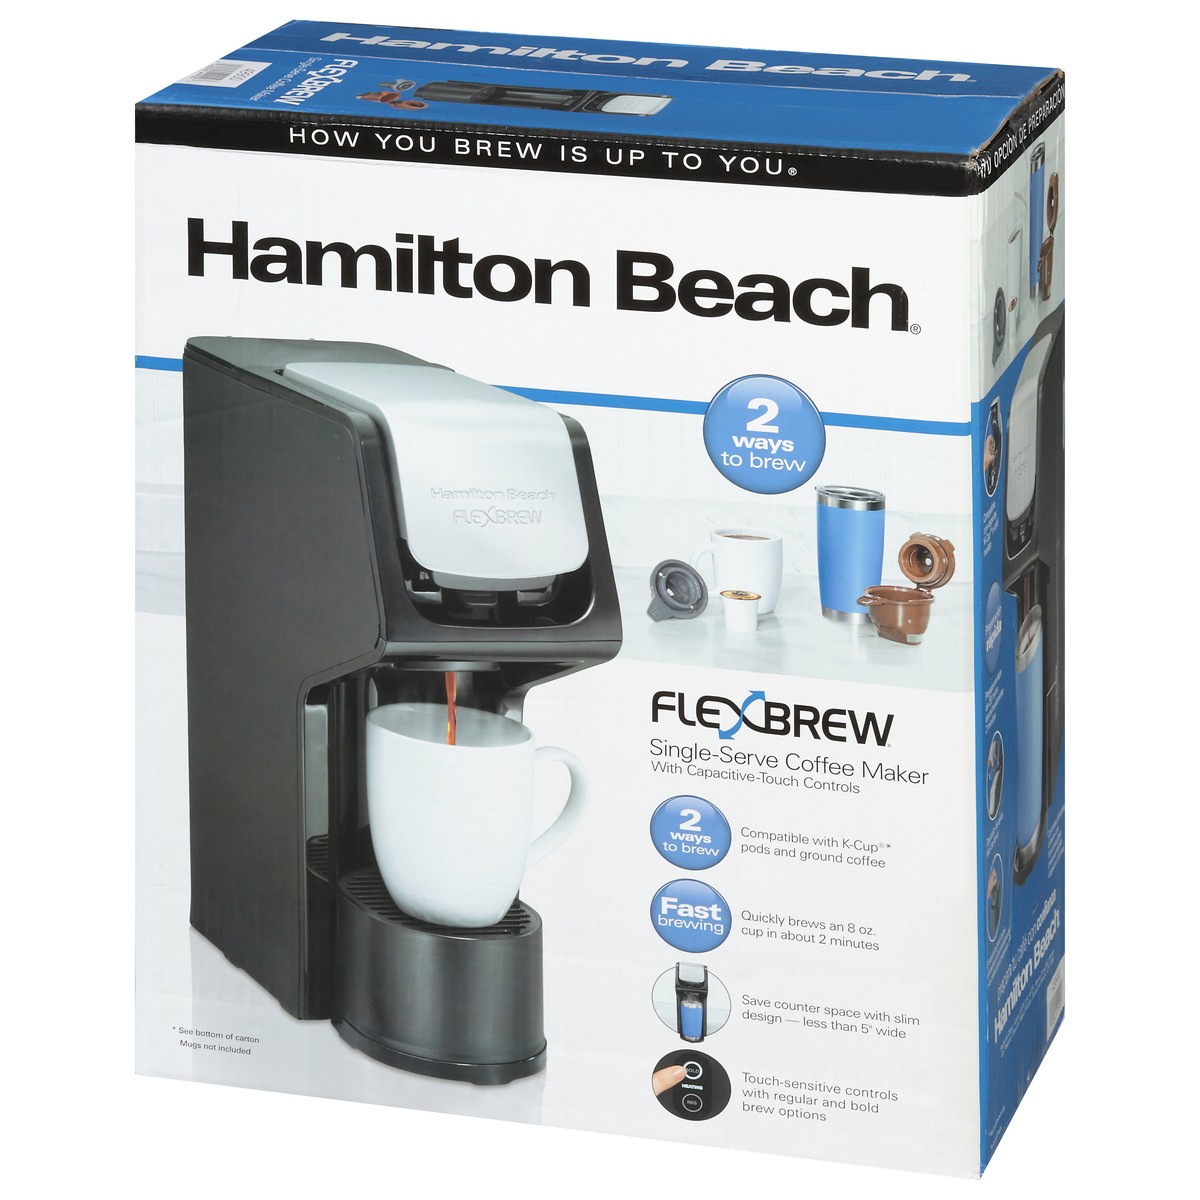 slide 3 of 9, Hamilton Beach FlexBrew Single-Serve Coffee Maker with Capacitive-Touch Controls 1 ea, 1 ct